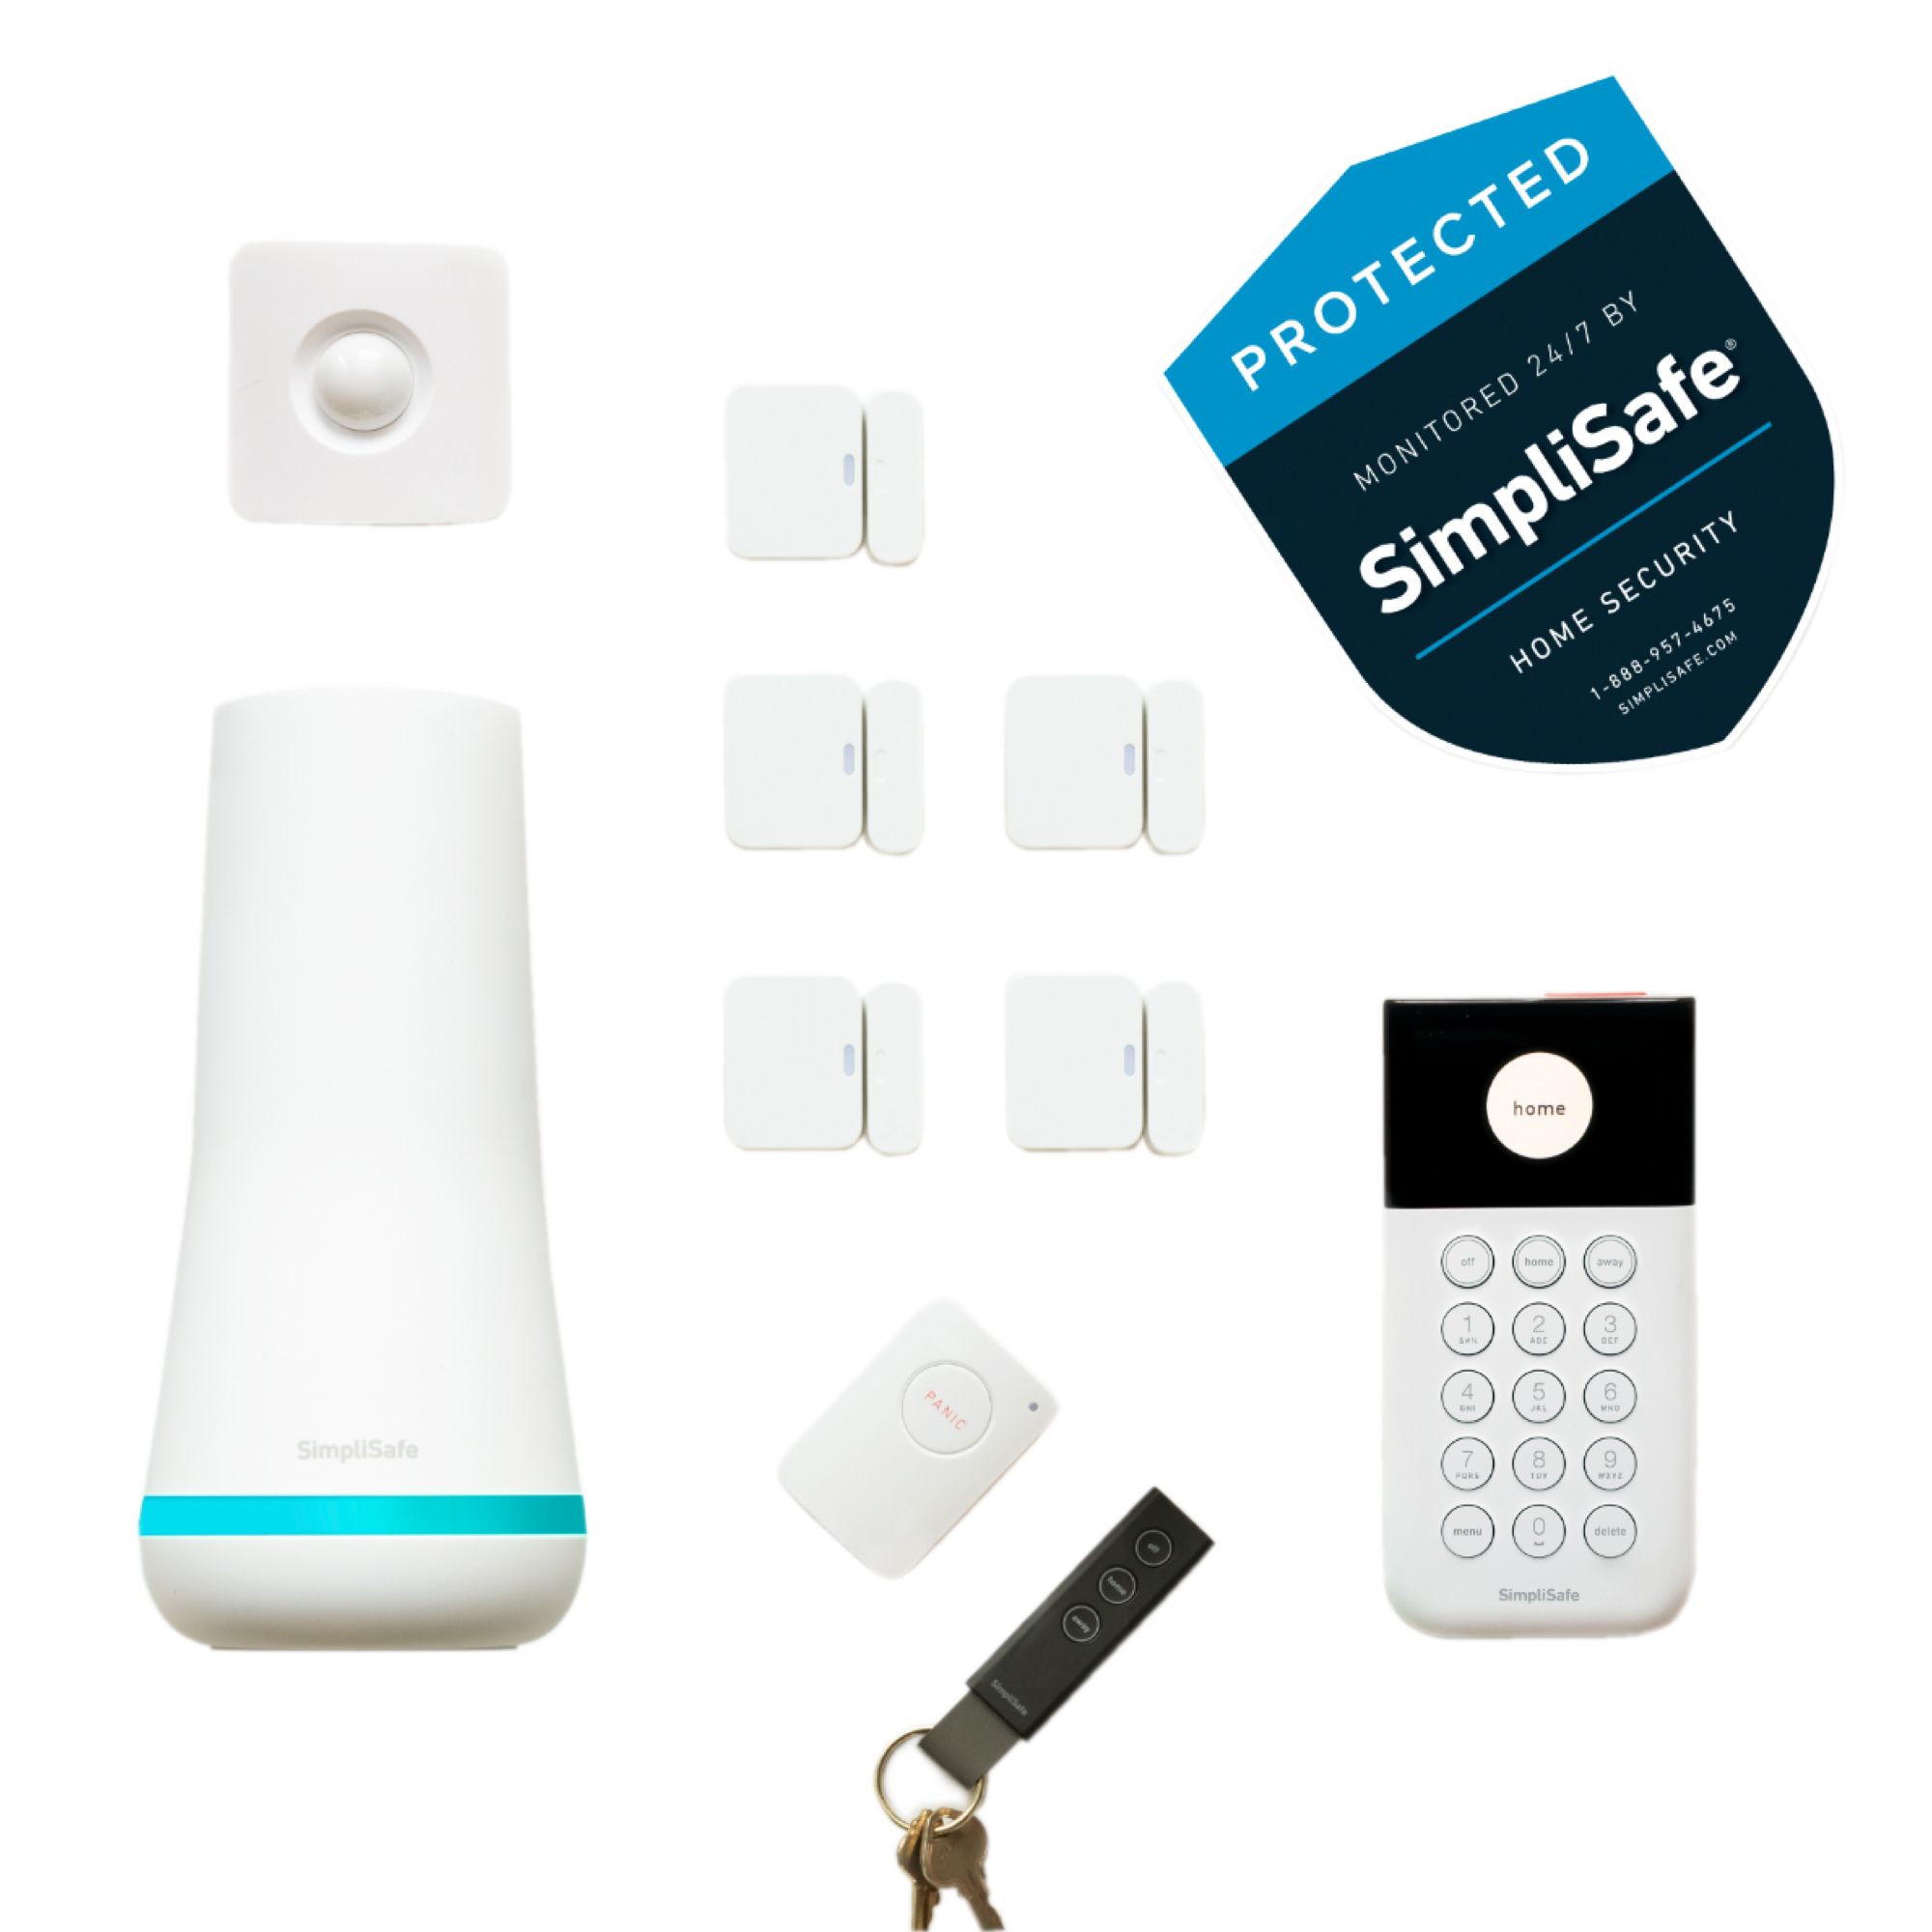 simplisafe wireless home security